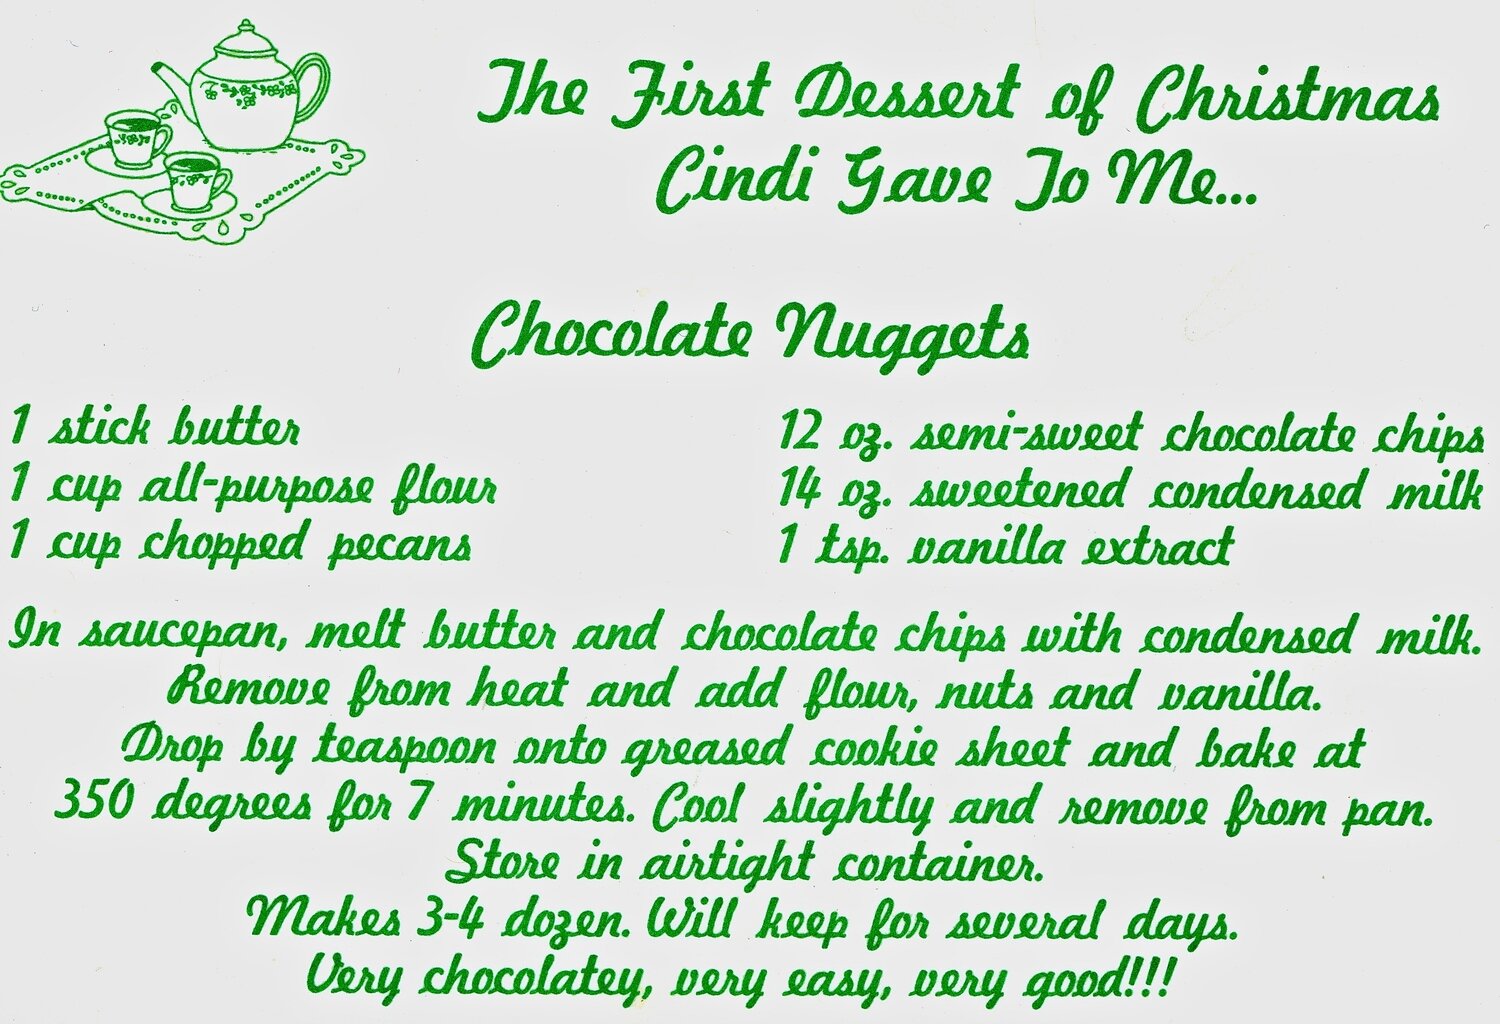 Cindi's Chocolate Nuggets